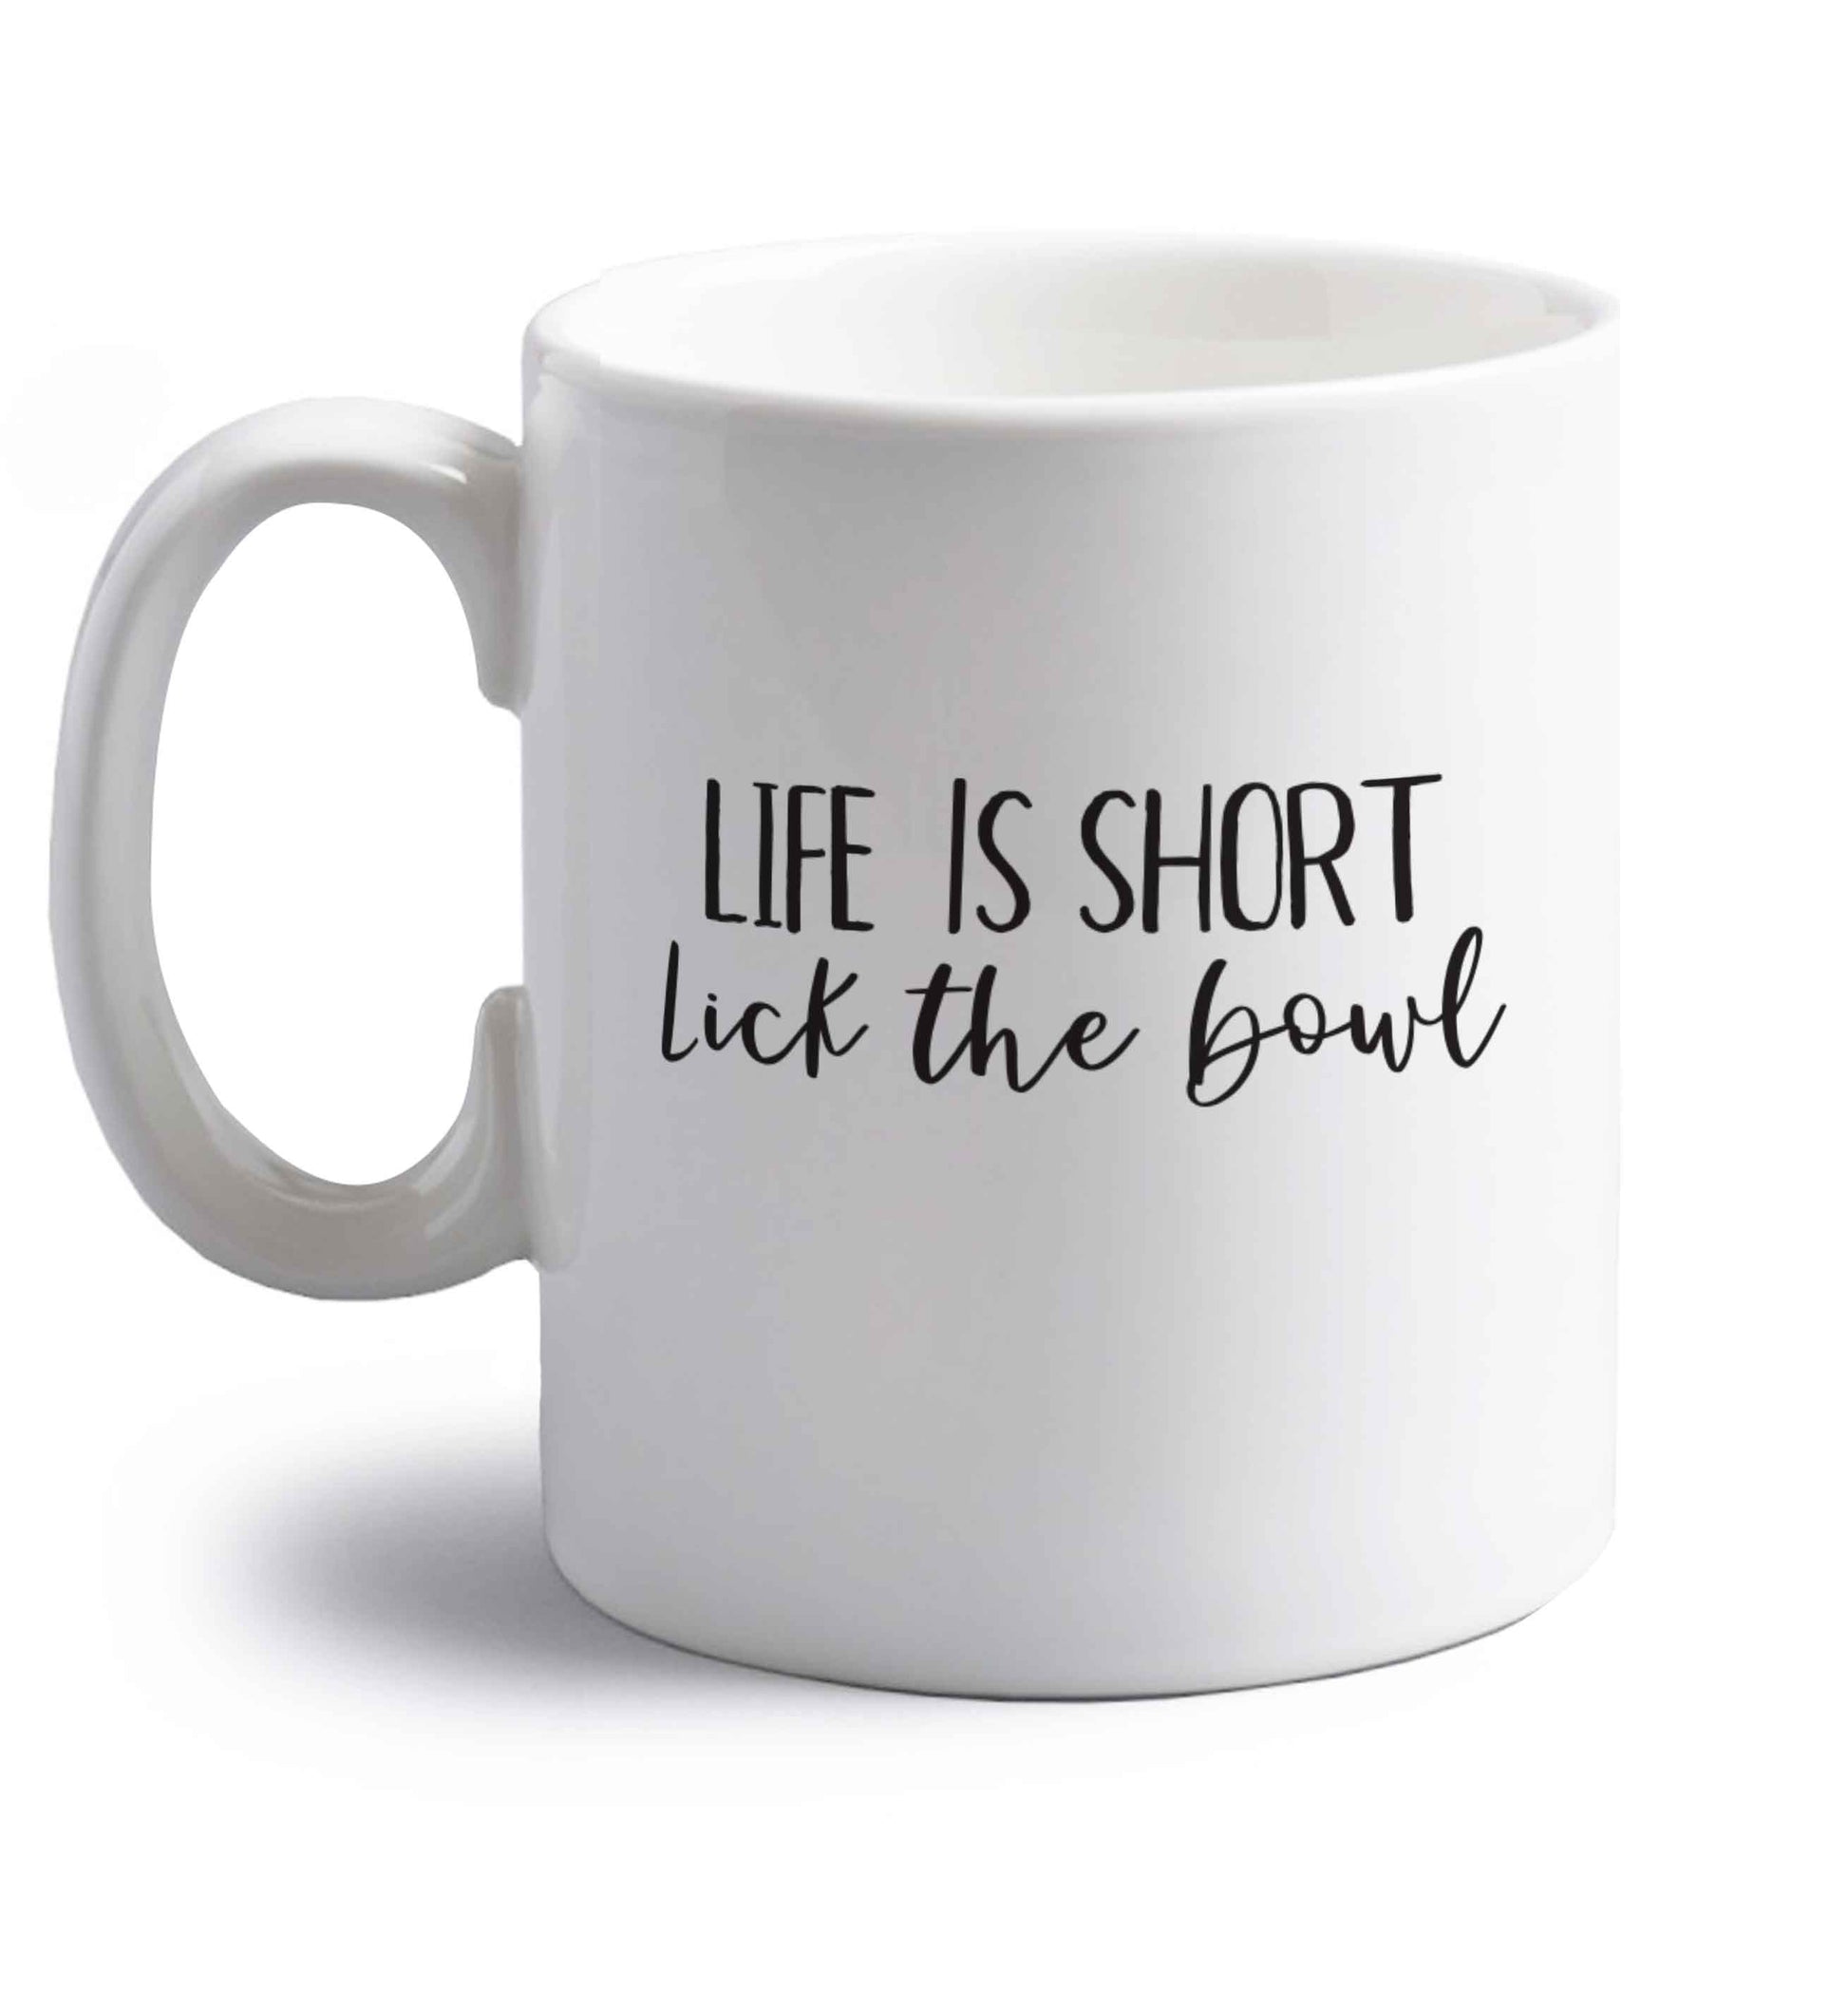 Life is short lick the bowl right handed white ceramic mug 